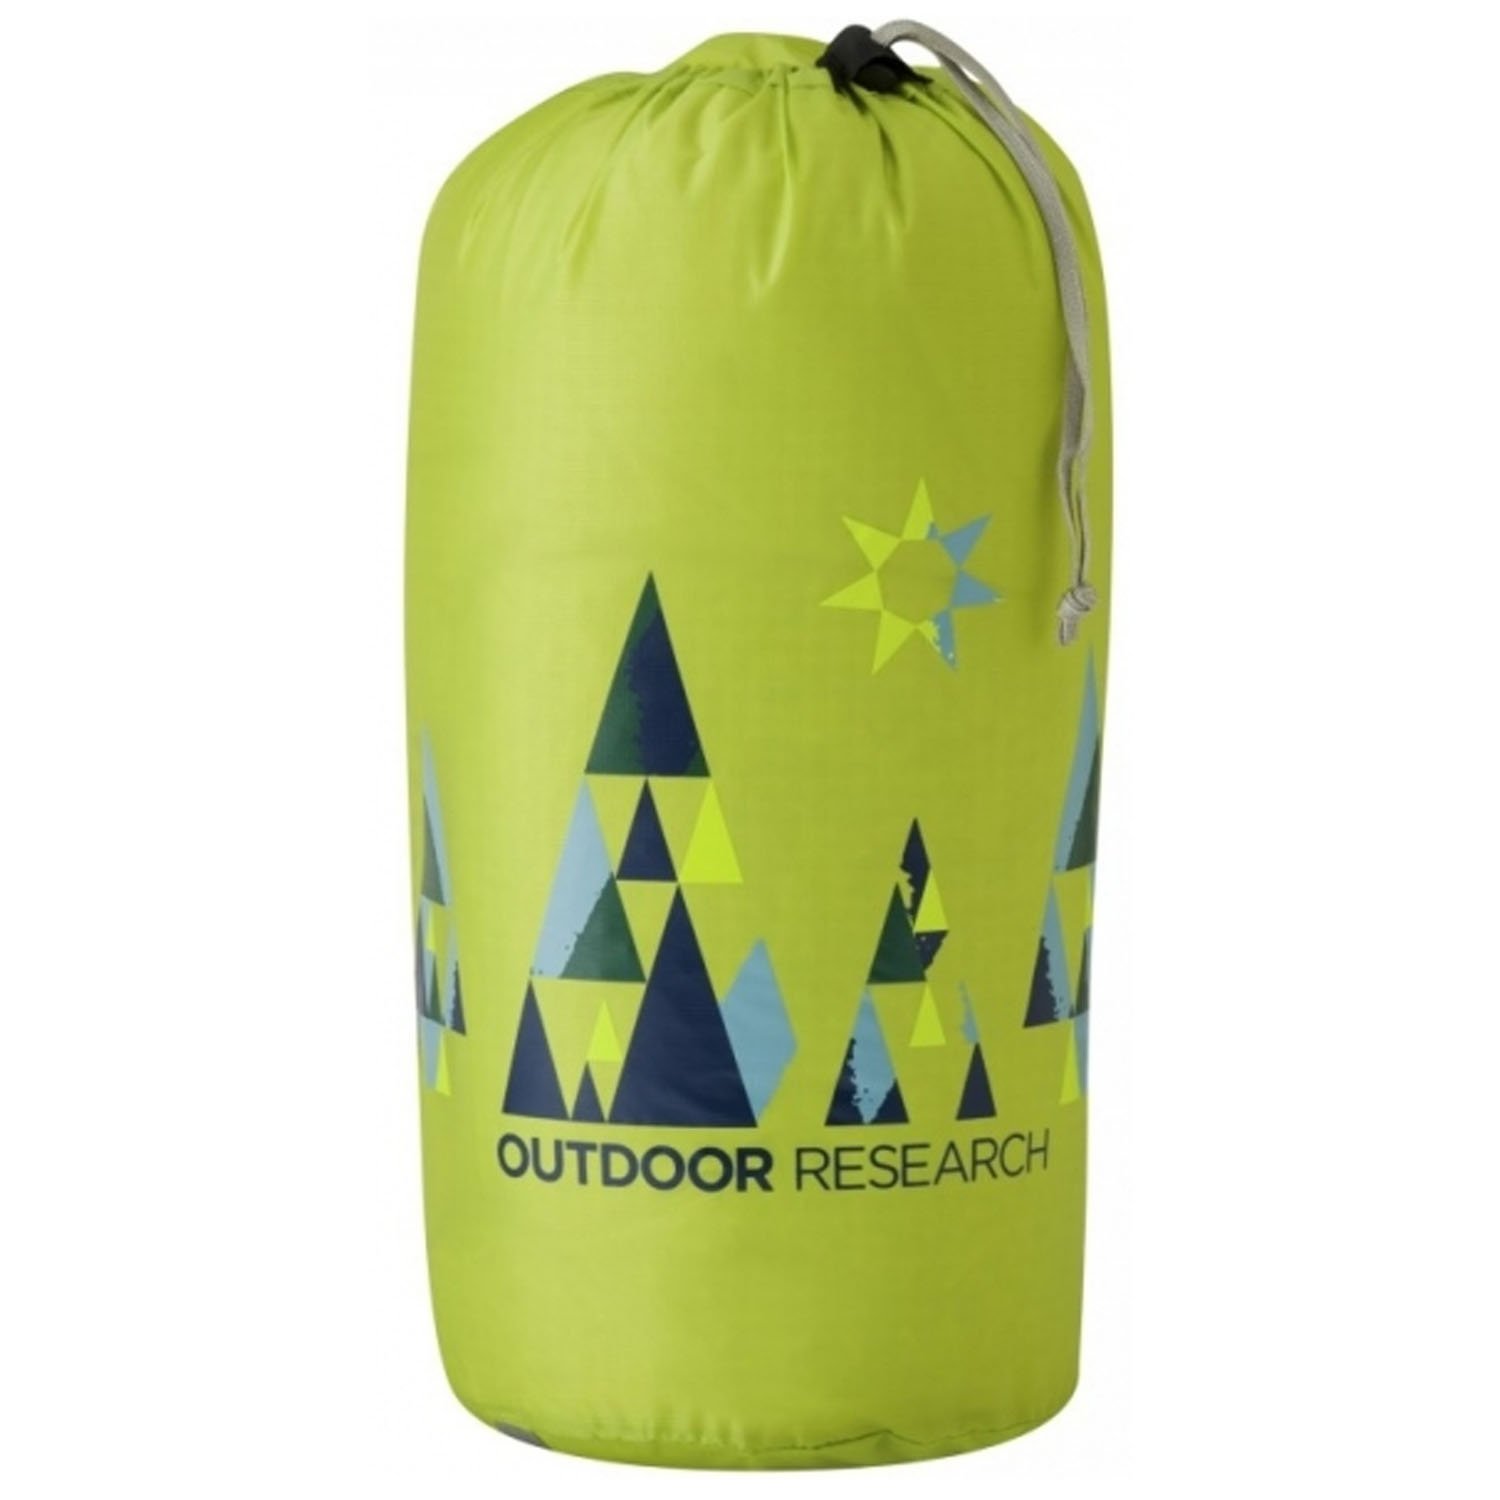 Влагозащитный мешок Outdoor Research Woodsy, 15 литров, lemongrass, 2501760489 suggestion box storage holder aluminum mailbox outdoor letter container office case supply